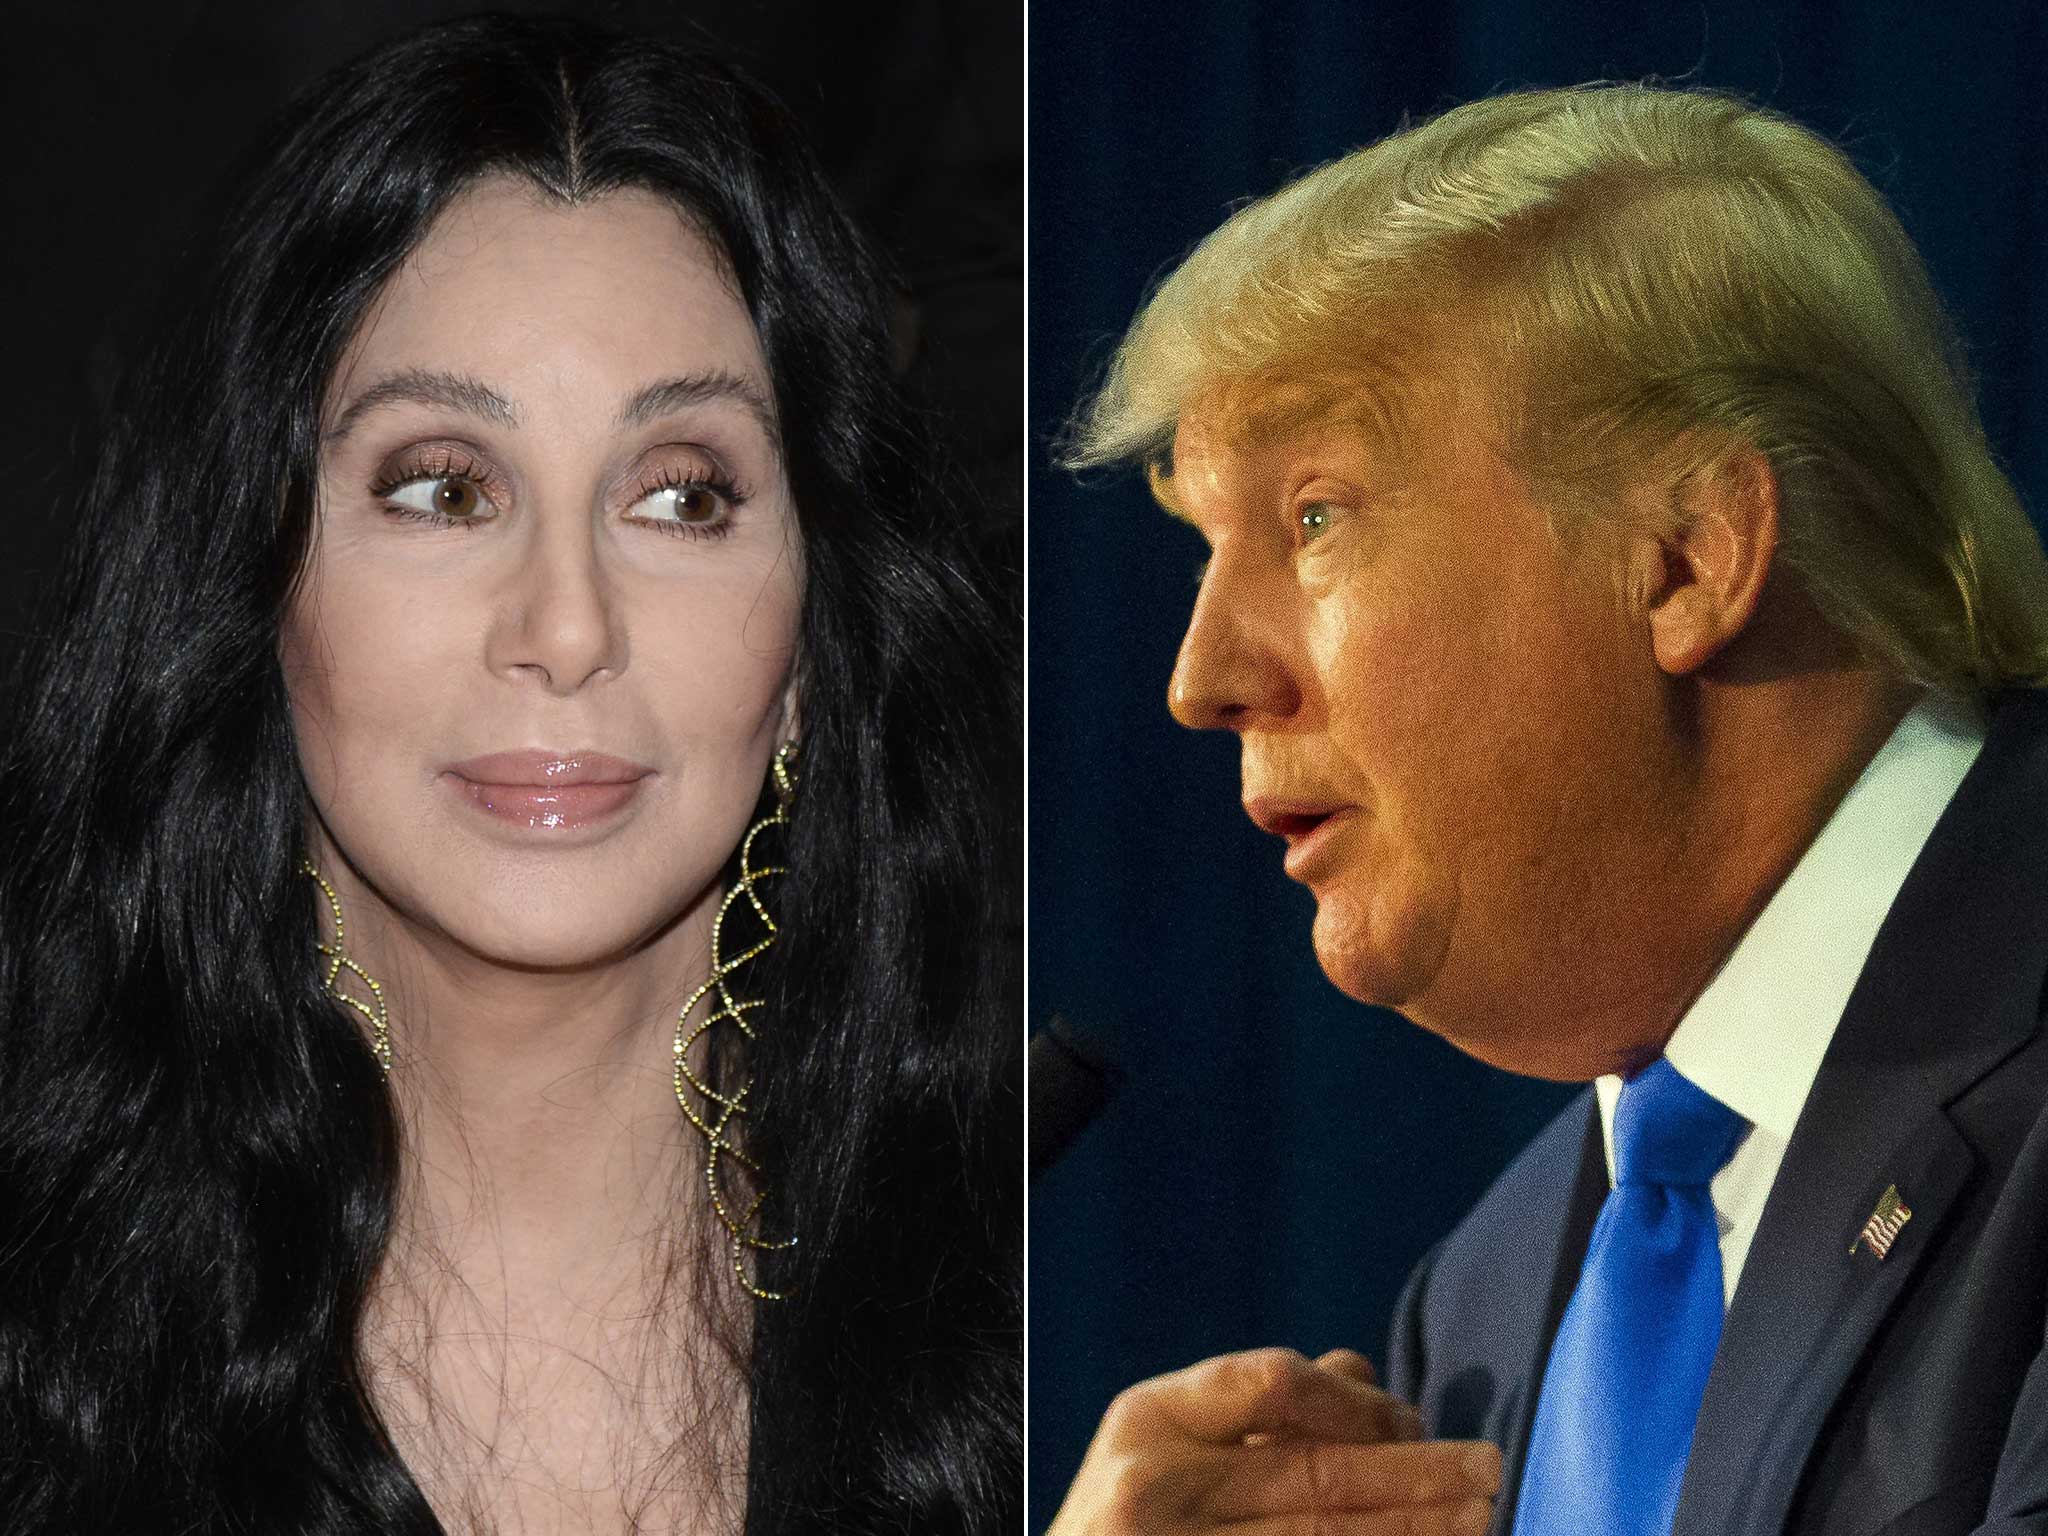 Cher has taken a swipe at Republican hopeful Donald Trump